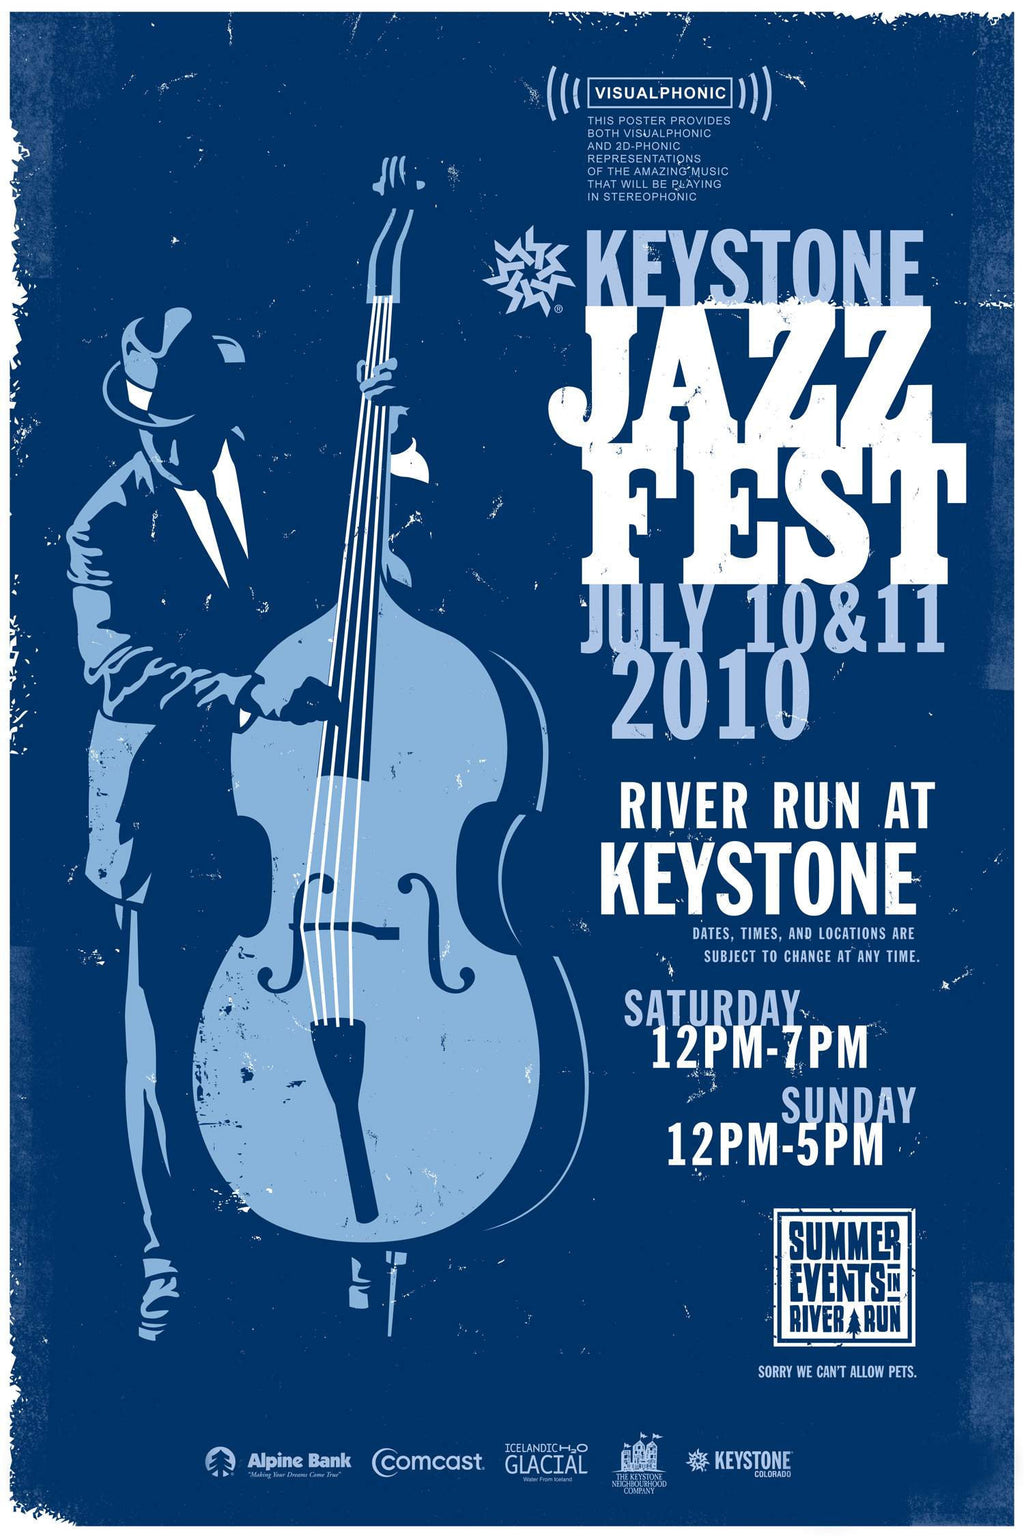 0781 Vintage Music Art Poster - Keystone Jazz Fest Festival